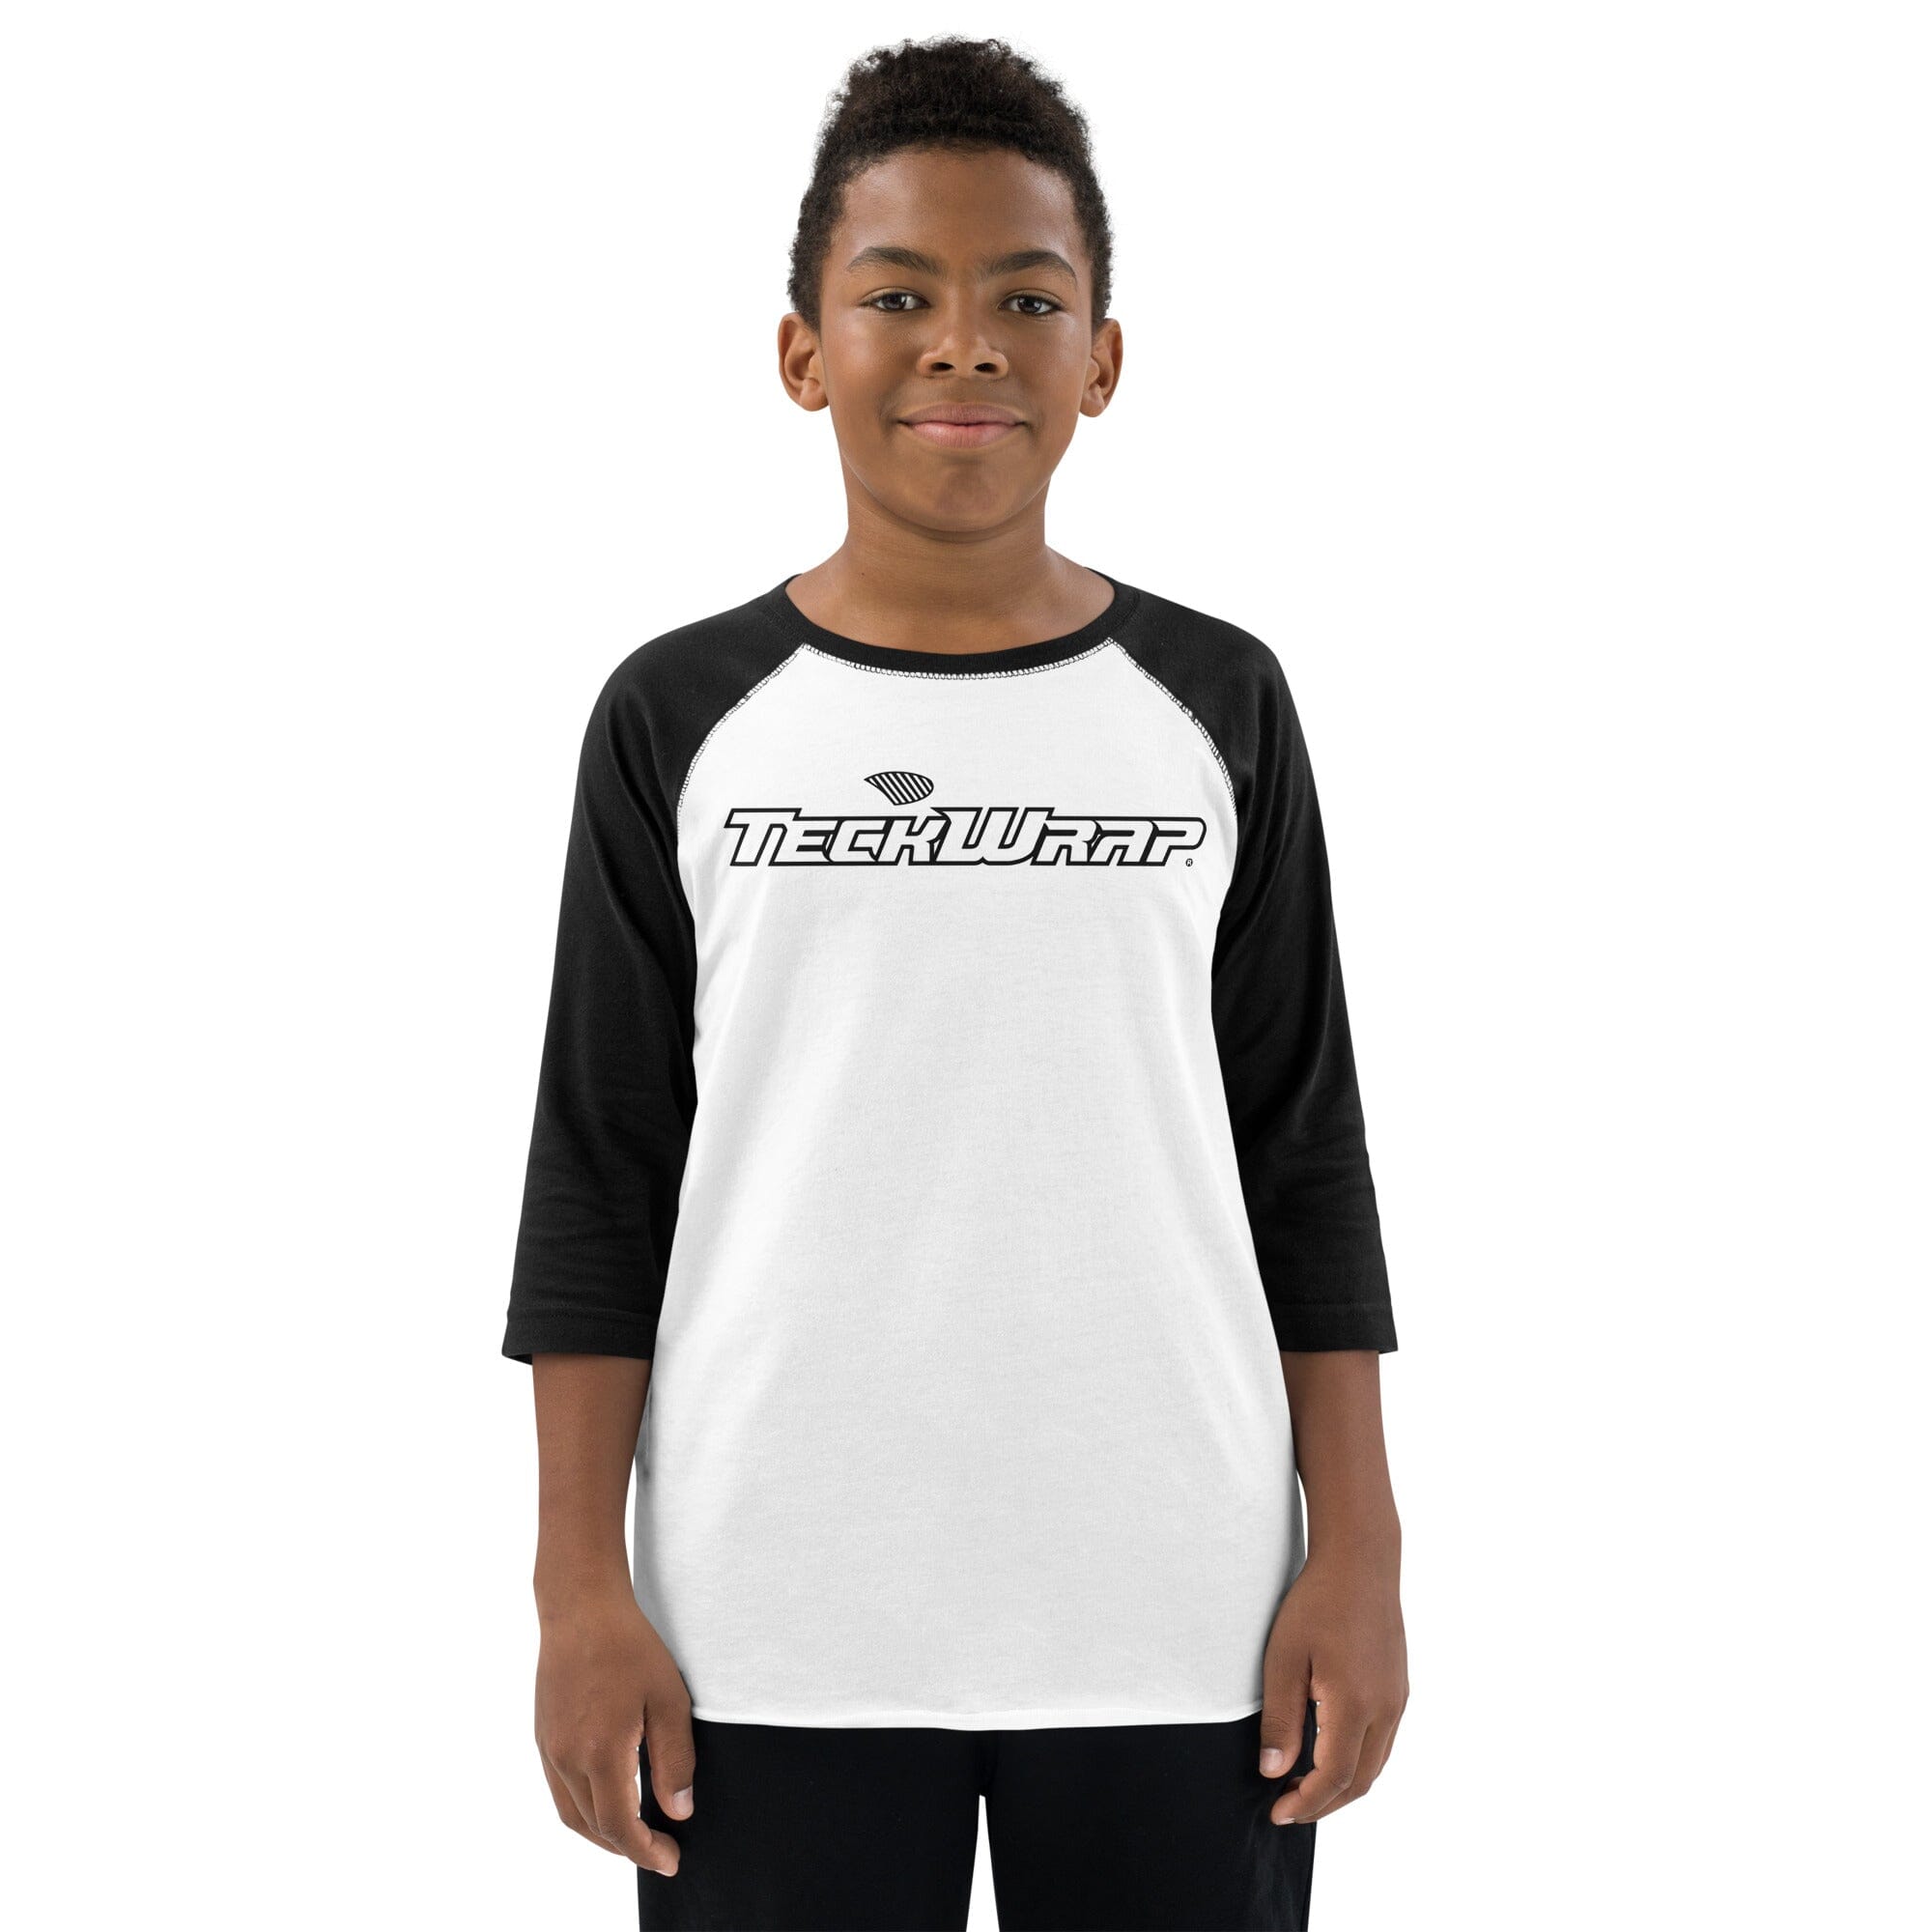 Youth baseball shirt Teckwrap USA White/ Black S 